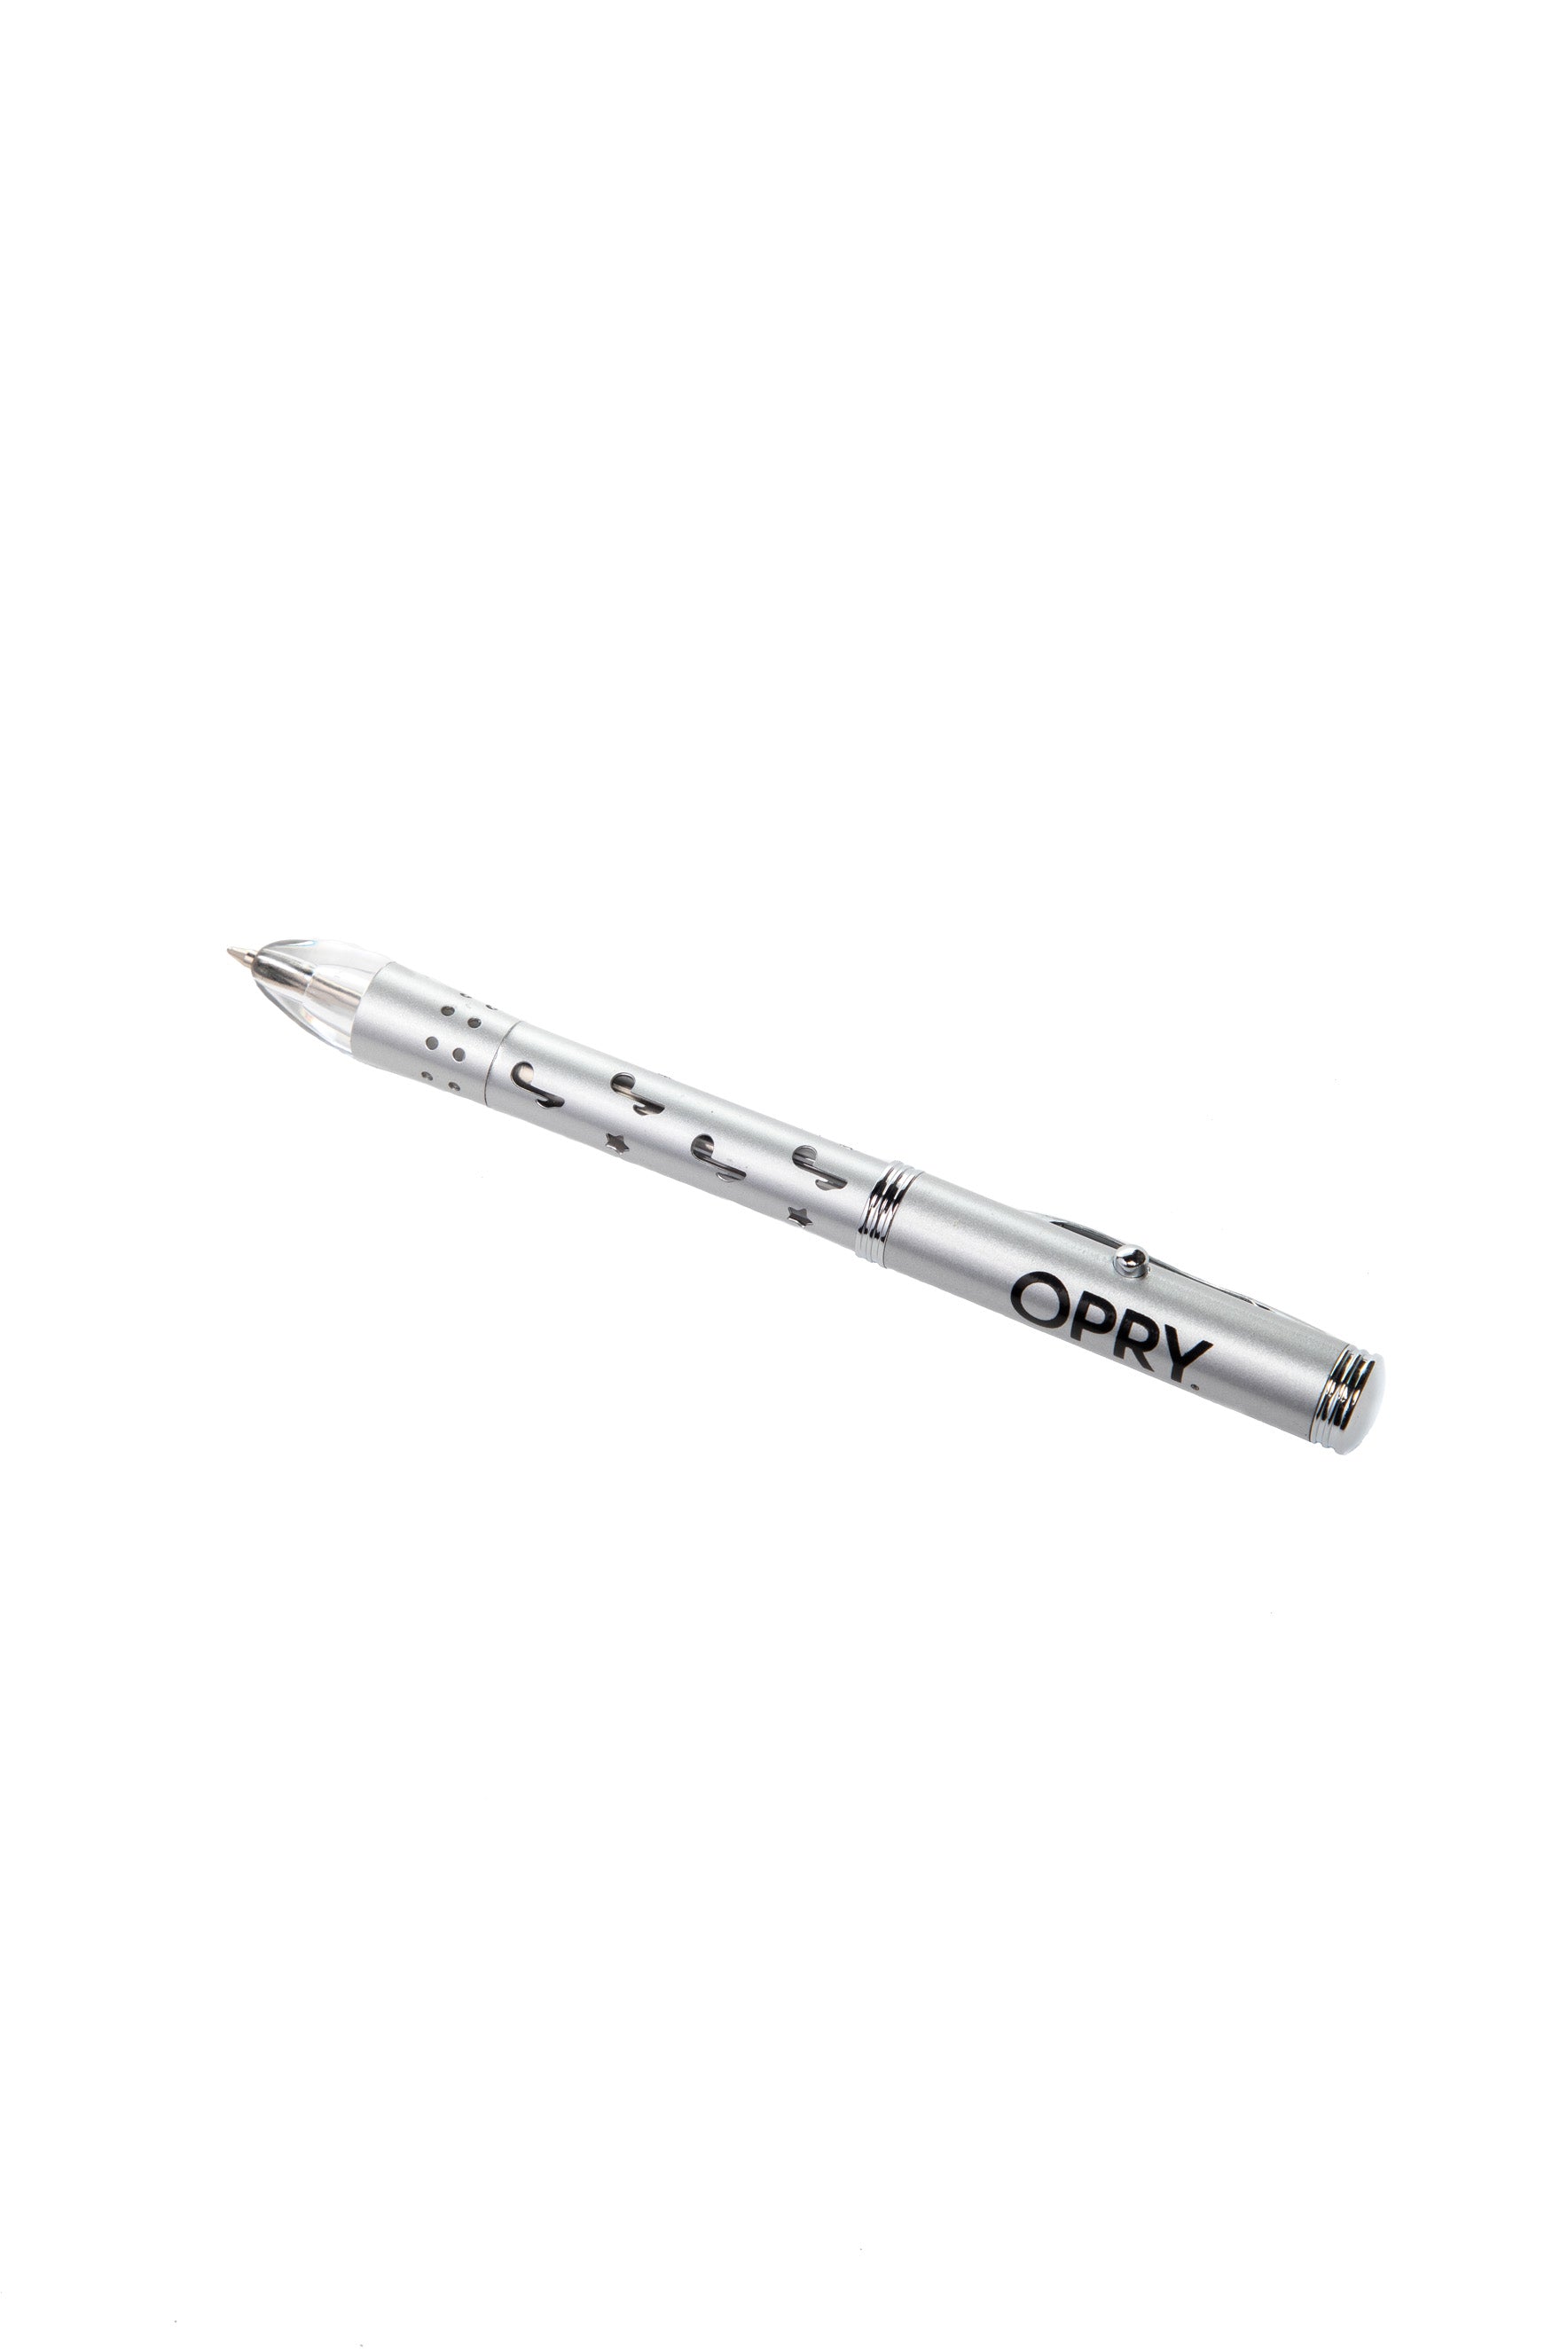 Opry Flashing Lights Pen